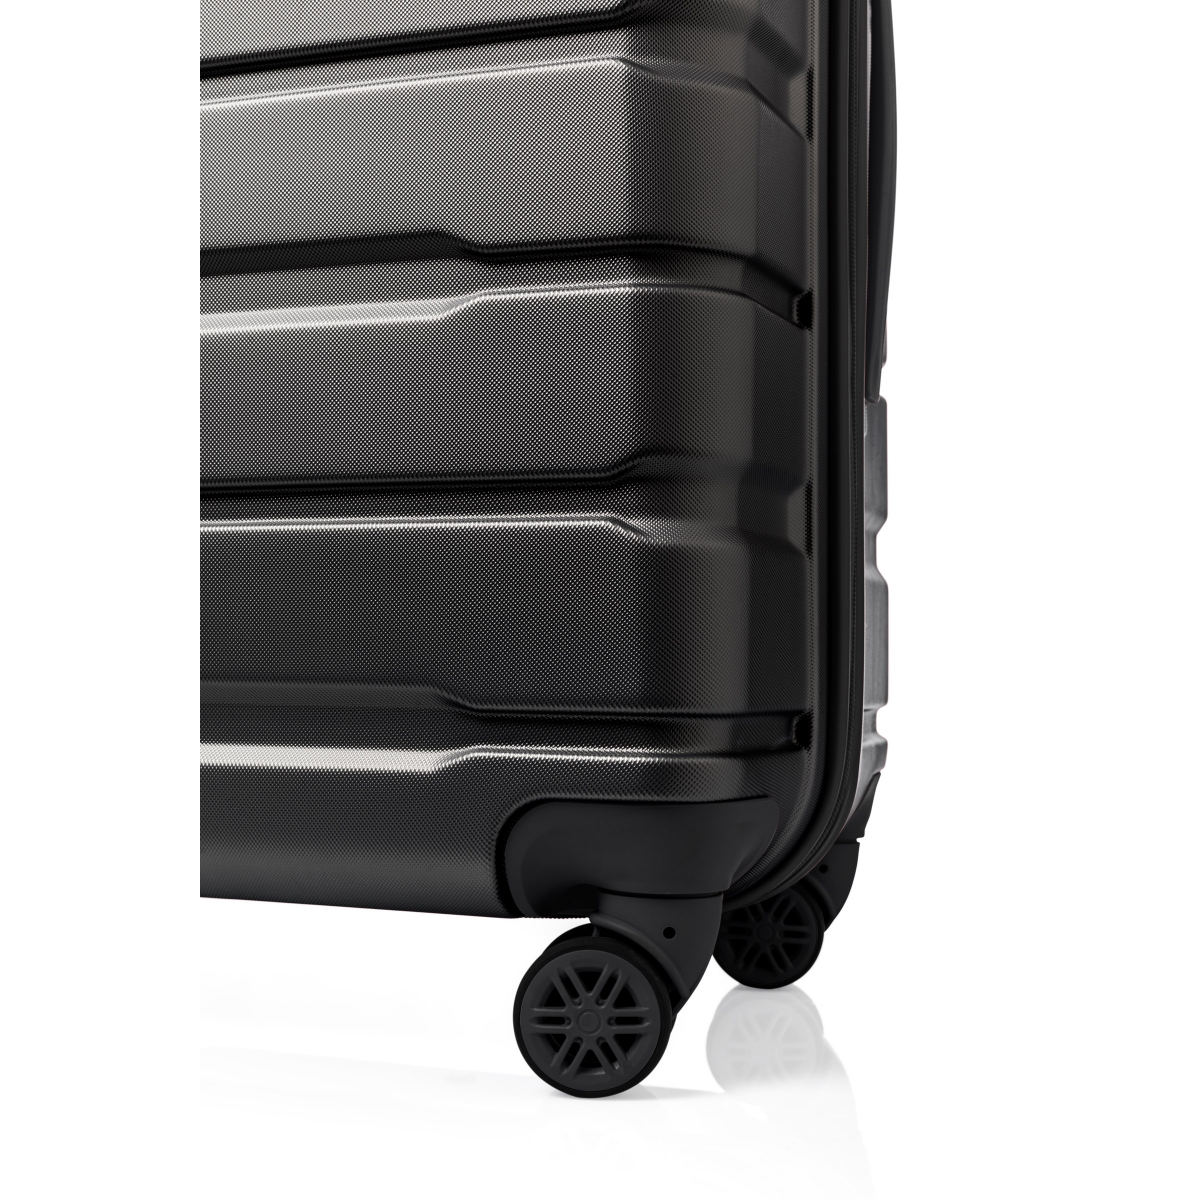 Gedox Abs Premium Tonaton 3'lü Valiz Seyahat Seti - Model:500.01 Siyah